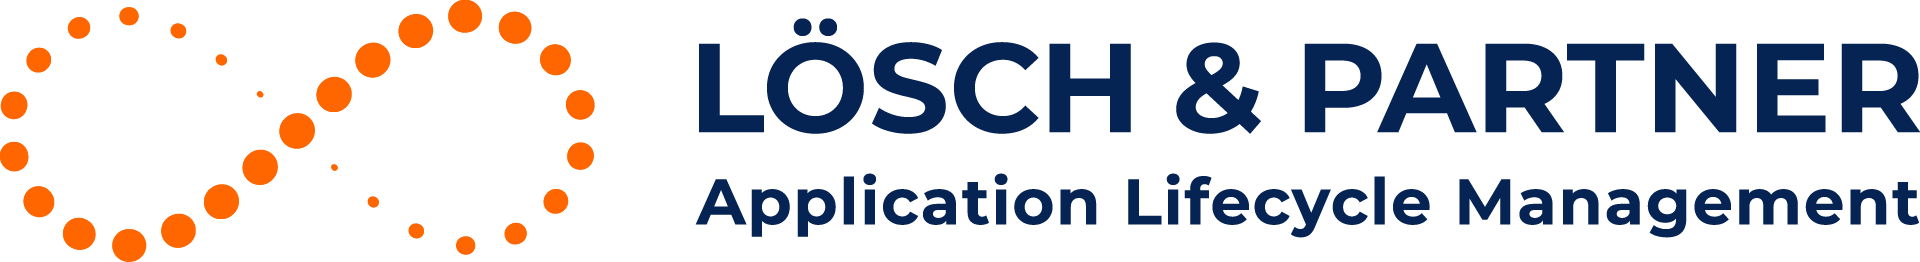 Lösch & Partner GmbH logo